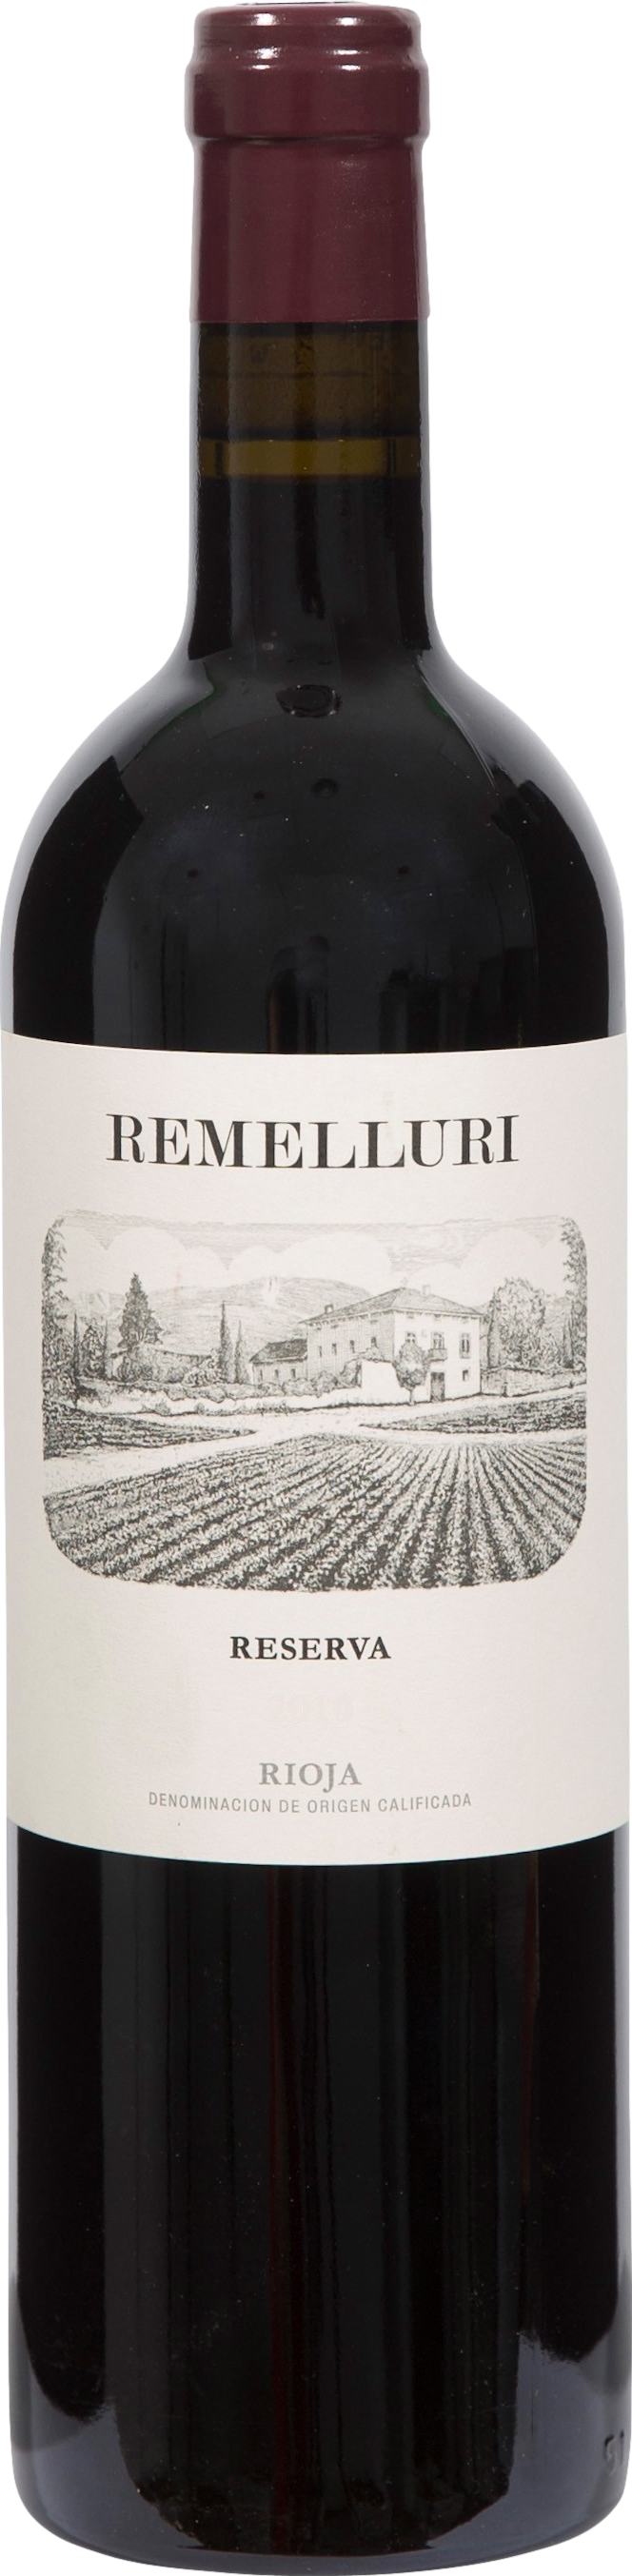 2016 günstig Kaufen-Remelluri Rioja Reserva 2016. Remelluri Rioja Reserva 2016 . 